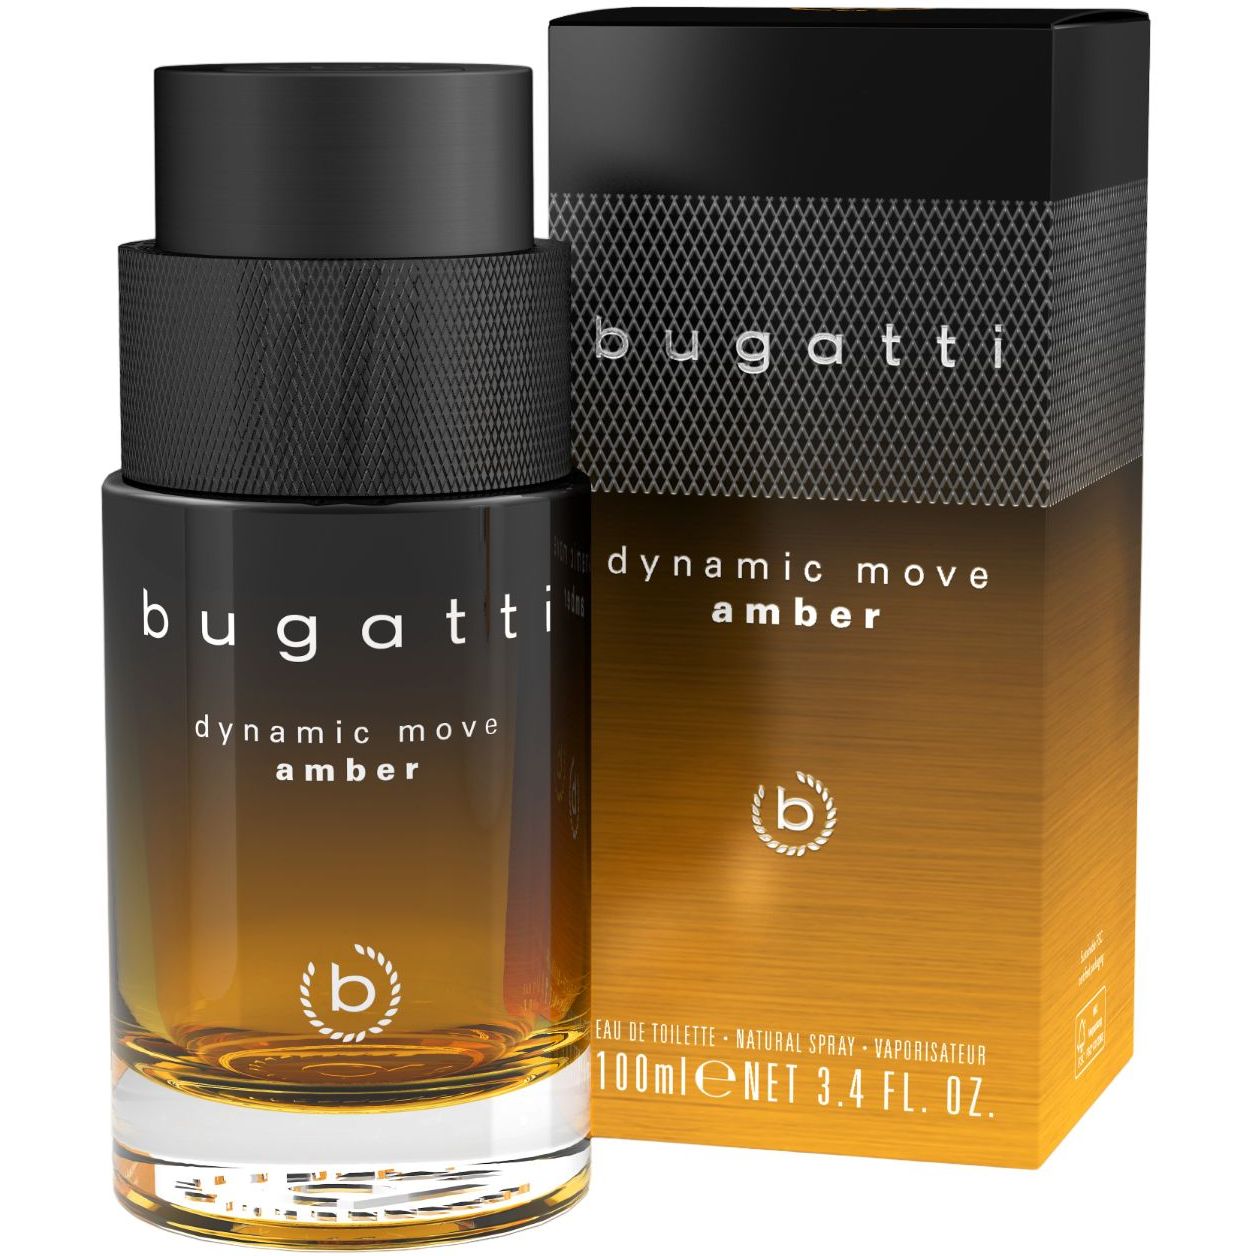 Туалетная вода для мужчин Bugatti Dynamice Move amber 100 мл - фото 1